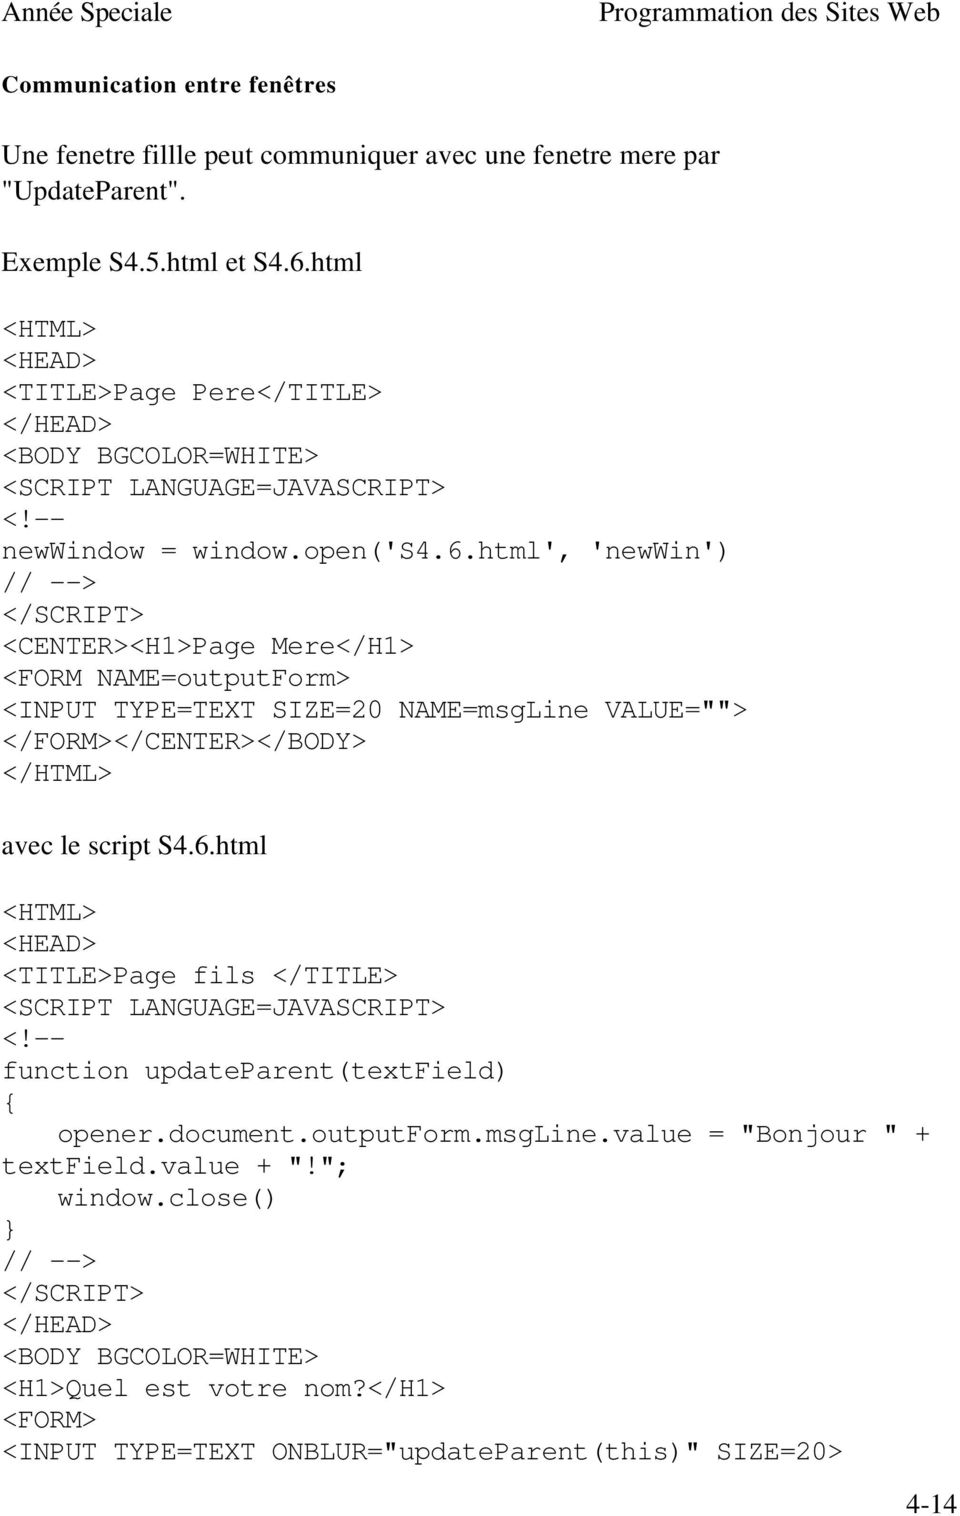 html', 'newwin') // --> <CENTER><H1>Page Mere</H1> <FORM NAME=outputForm> <INPUT TYPE=TEXT SIZE=20 NAME=msgLine VALUE=""> </FORM></CENTER> avec le script